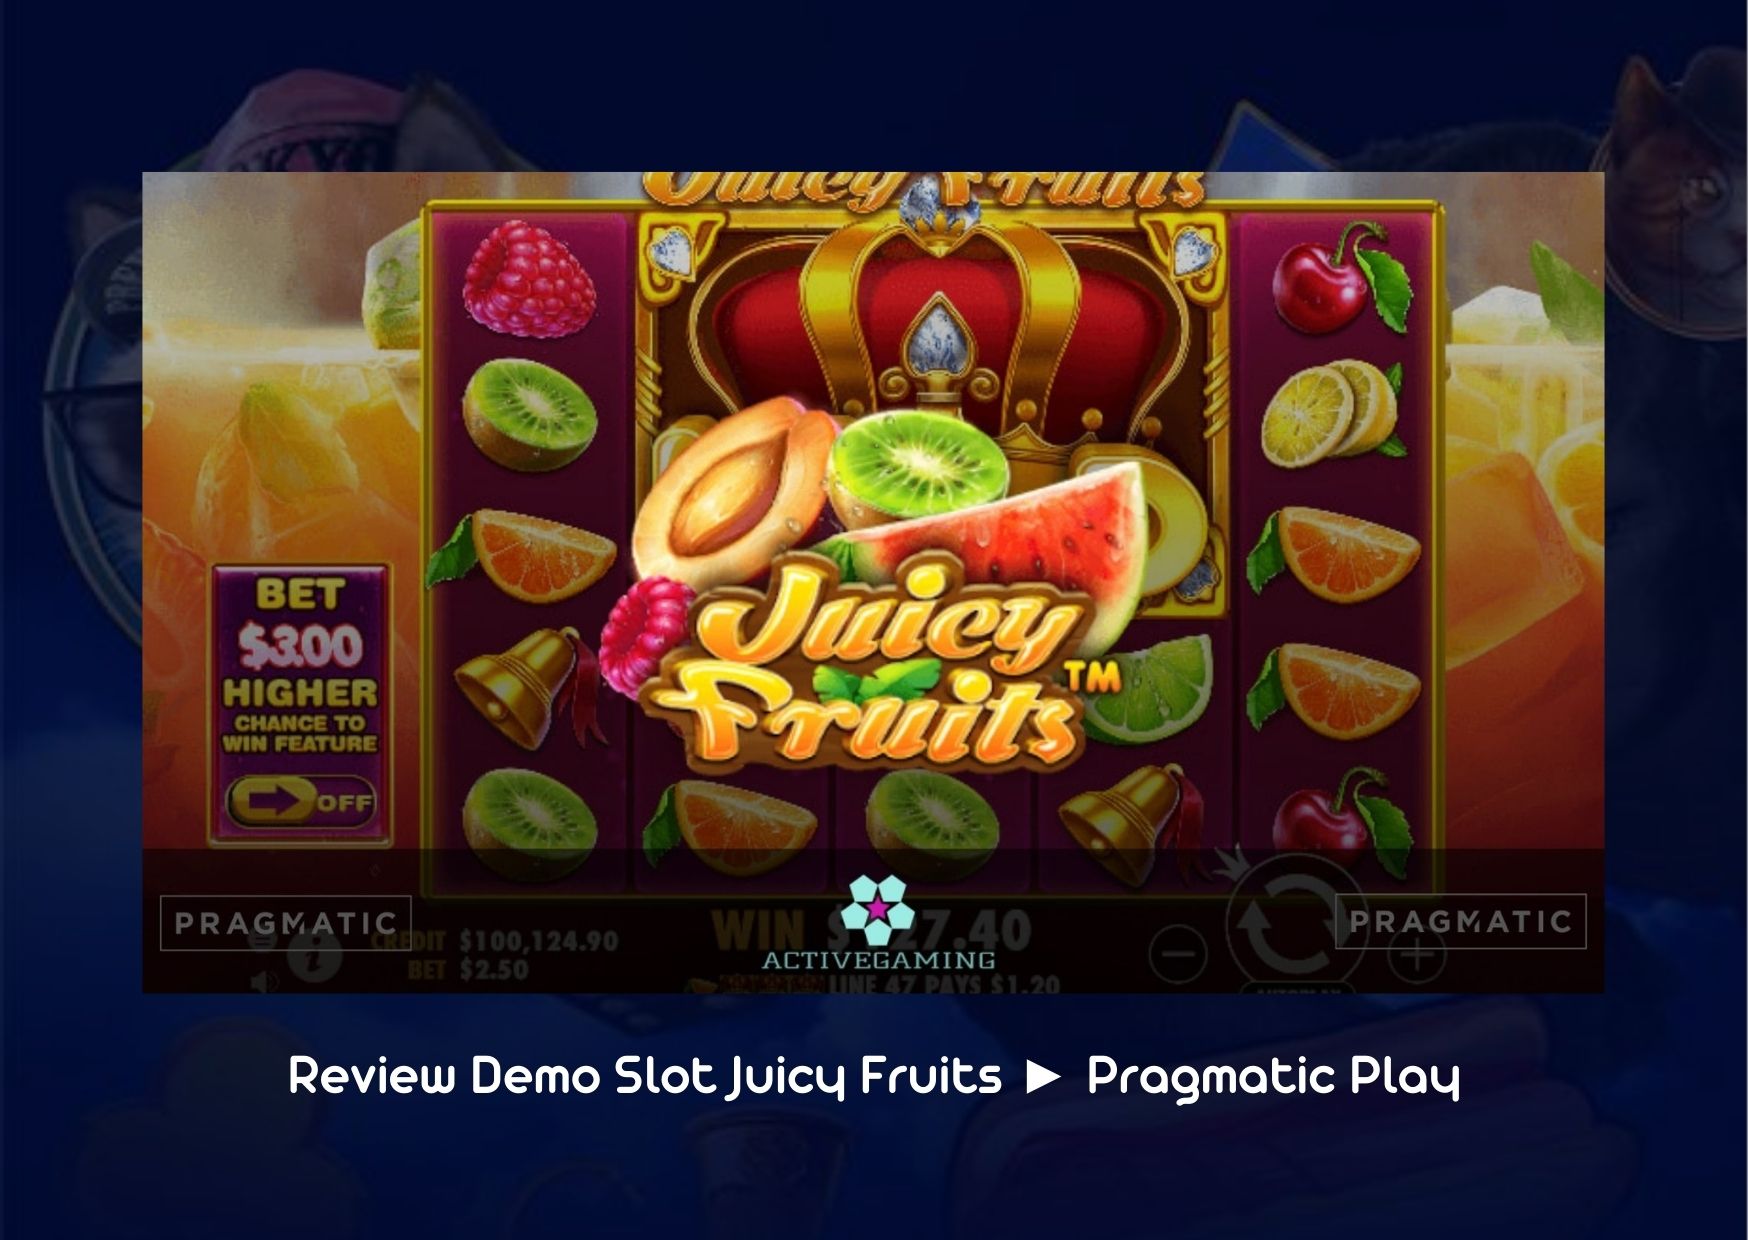 Review Demo Slot Juicy Fruits ► Pragmatic Play